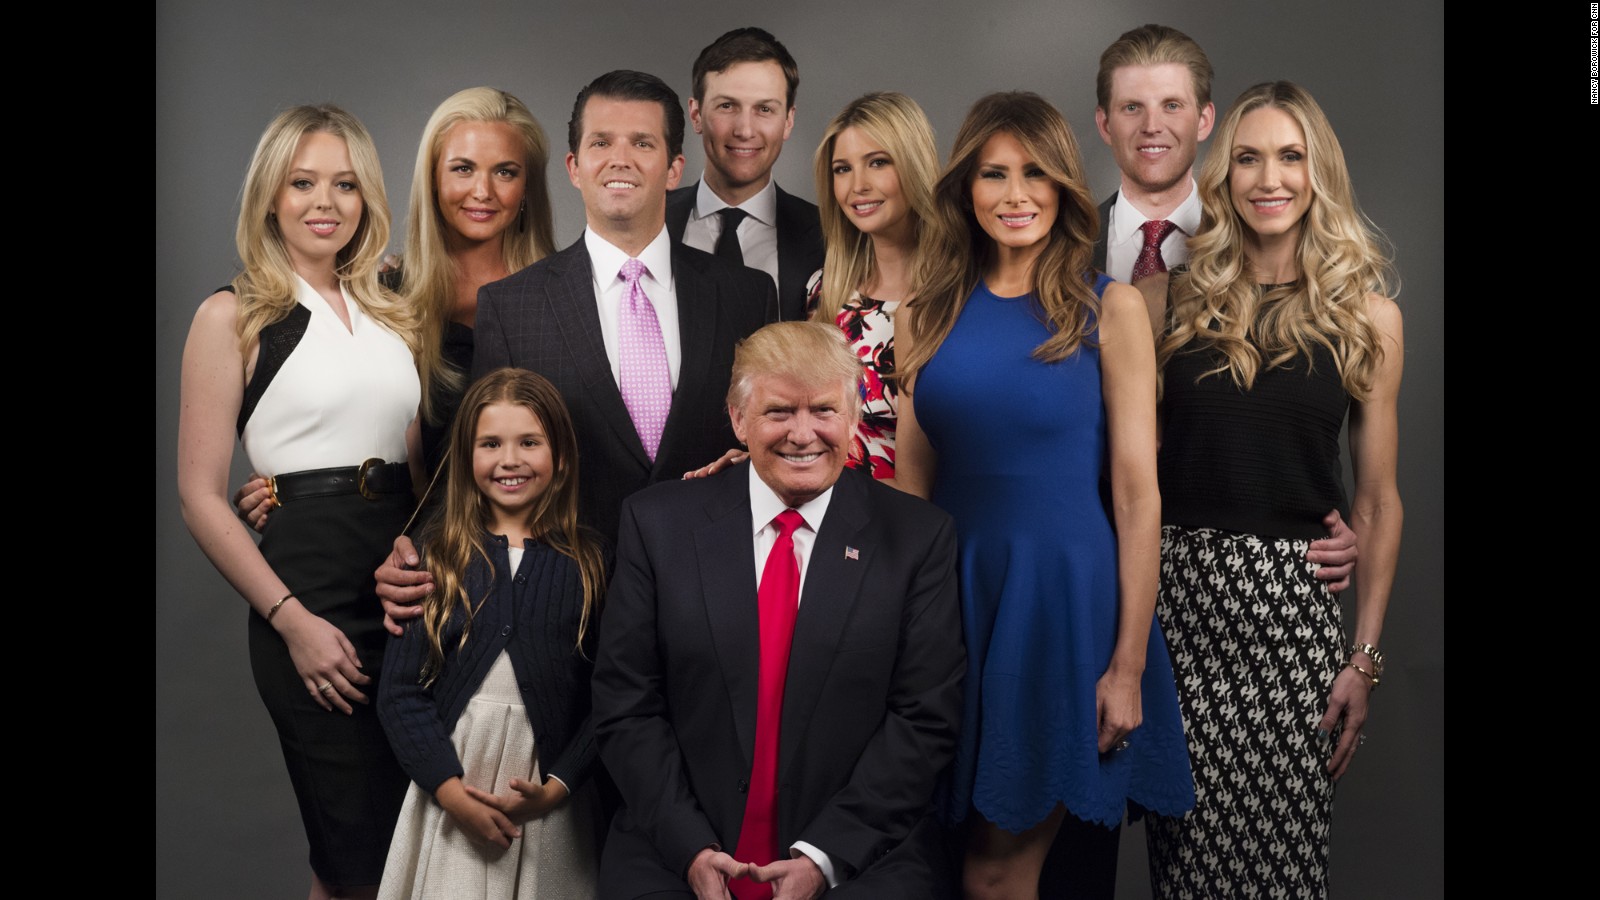 The Donald Trump Family Photos